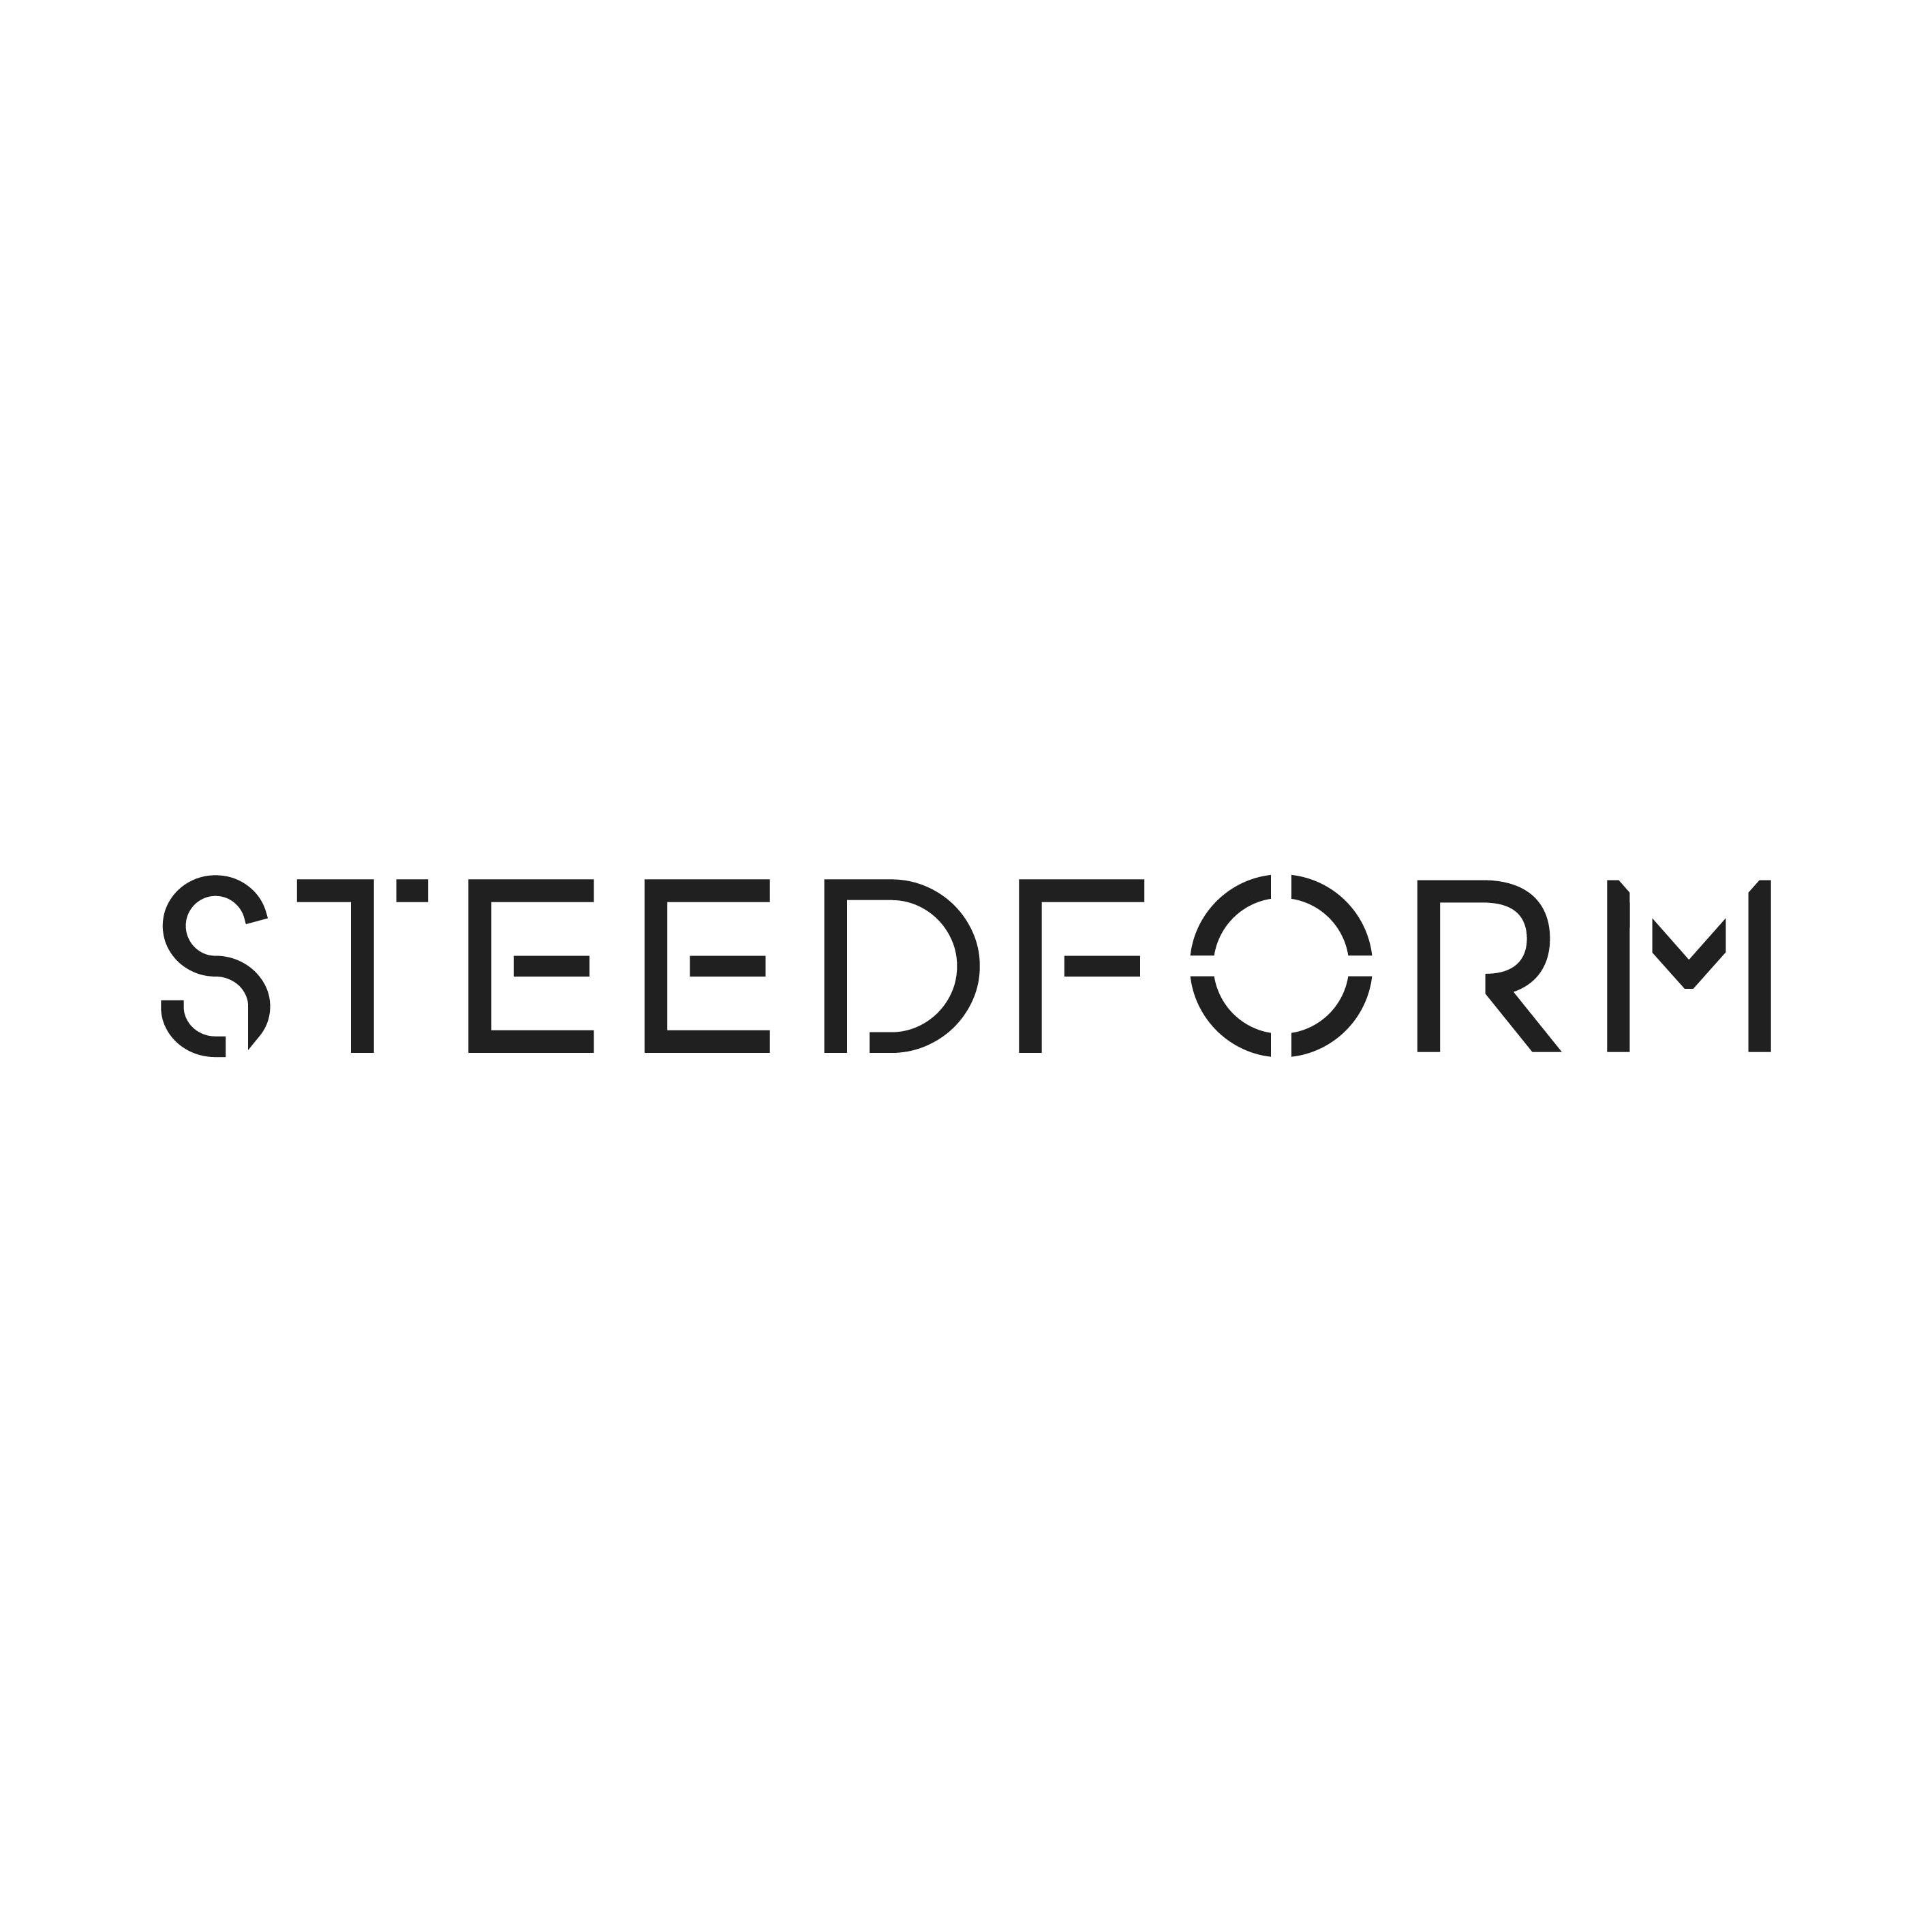 SteedForm - Stone Surfaces & Benchtops - Wingfield, SA 5013 - (08) 8440 7600 | ShowMeLocal.com